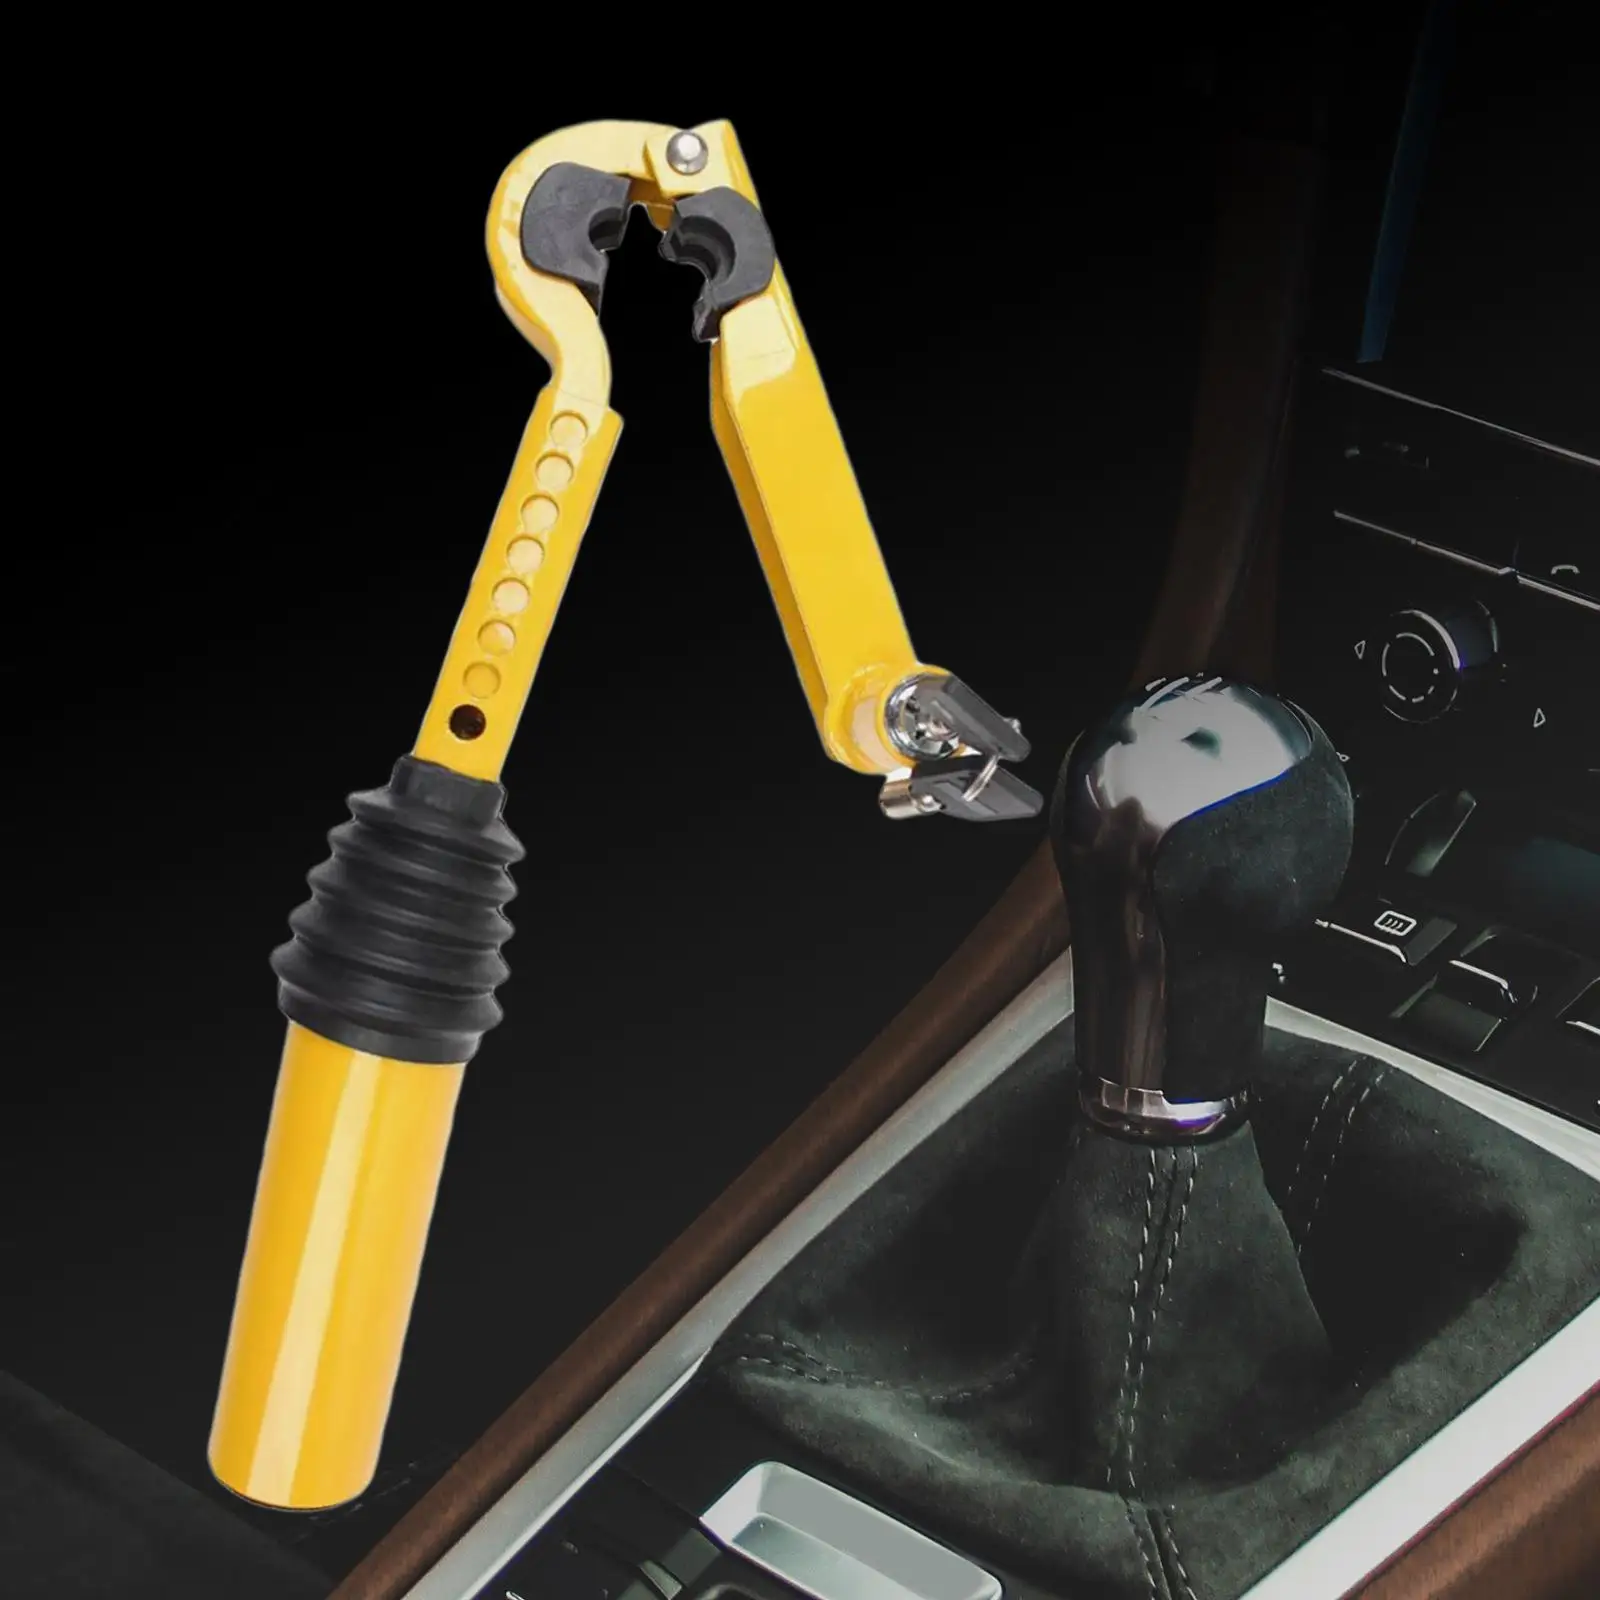 Car Handbrake Shift Lock Anti Theft Portable Sturdy Compact for Truck